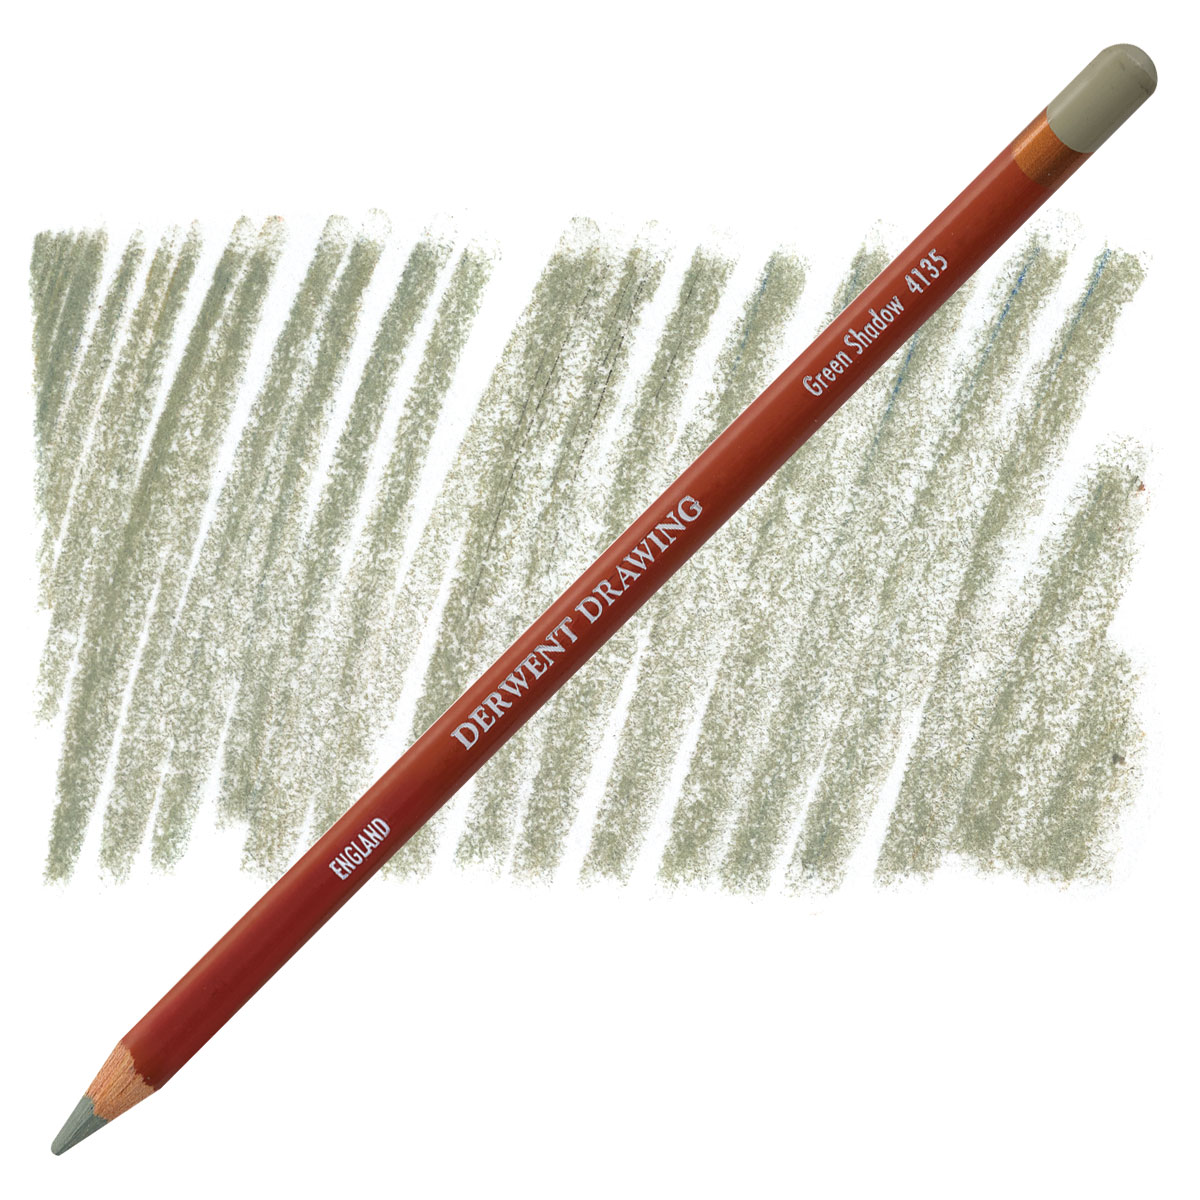 Derwent Drawing Colored Pencil Sets – Rileystreet Art Supply